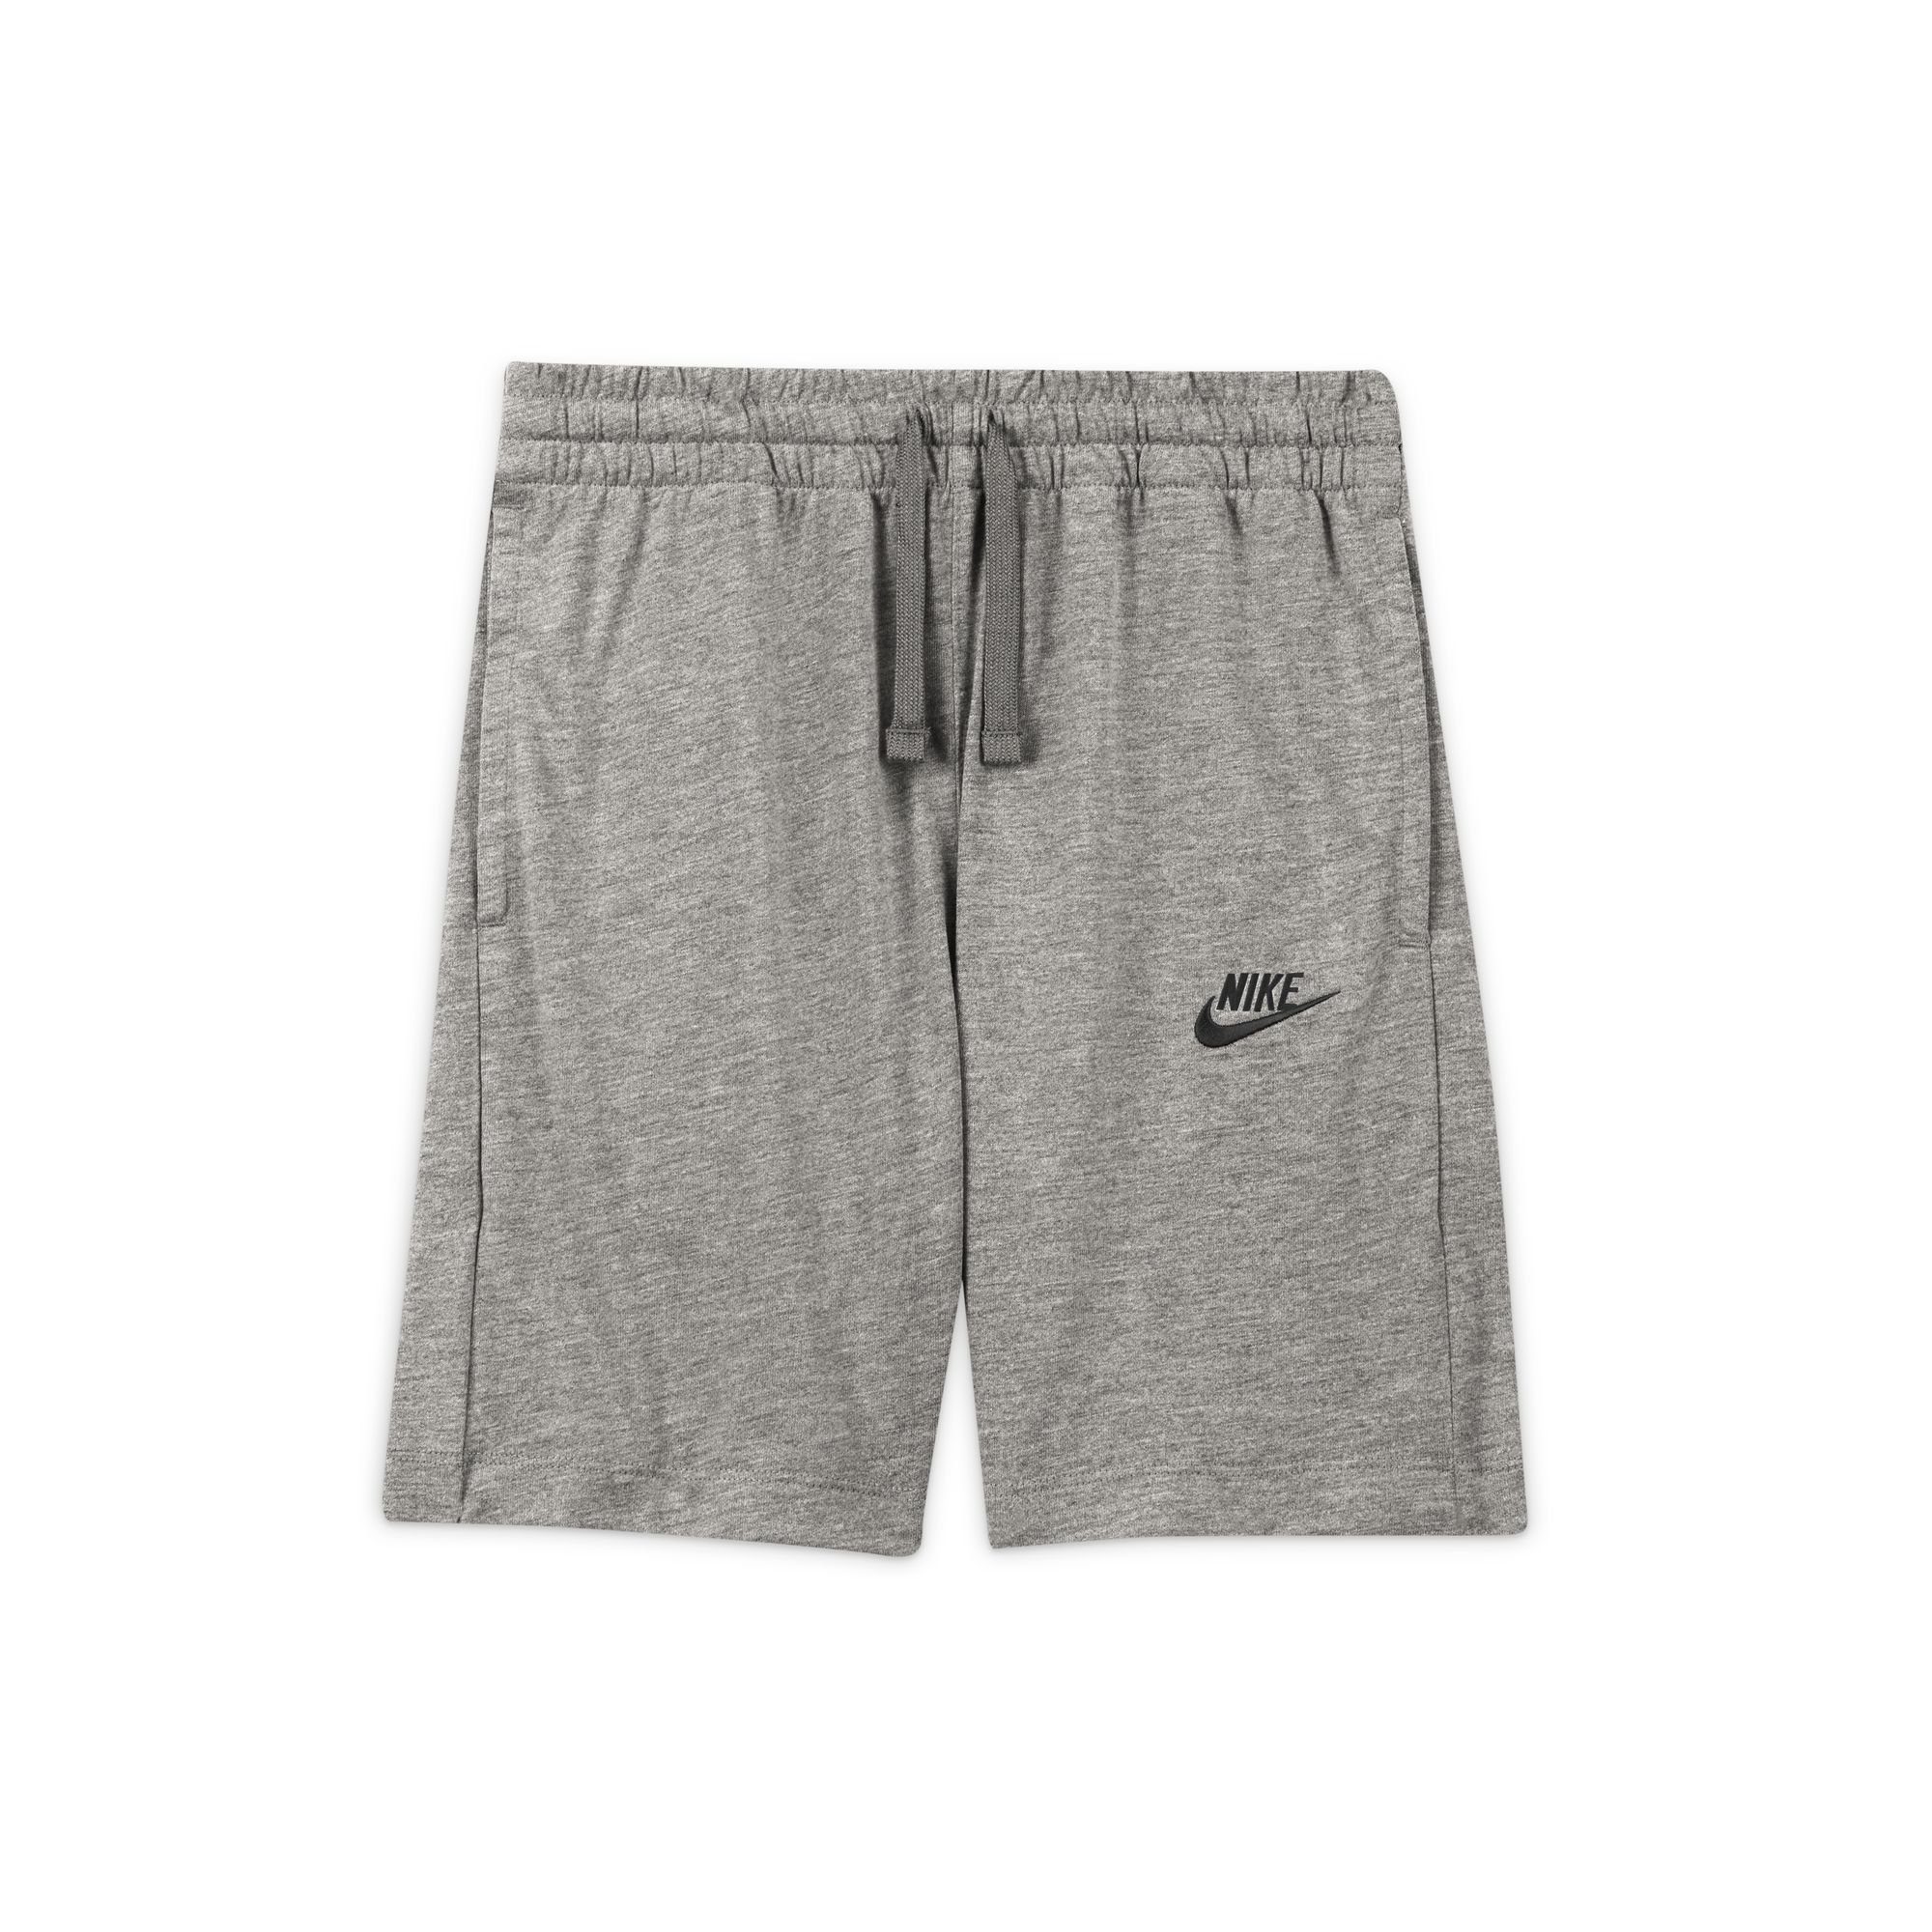 Nike Sportswear Shorts BIG KIDS' grau (BOYS) JERSEY SHORTS